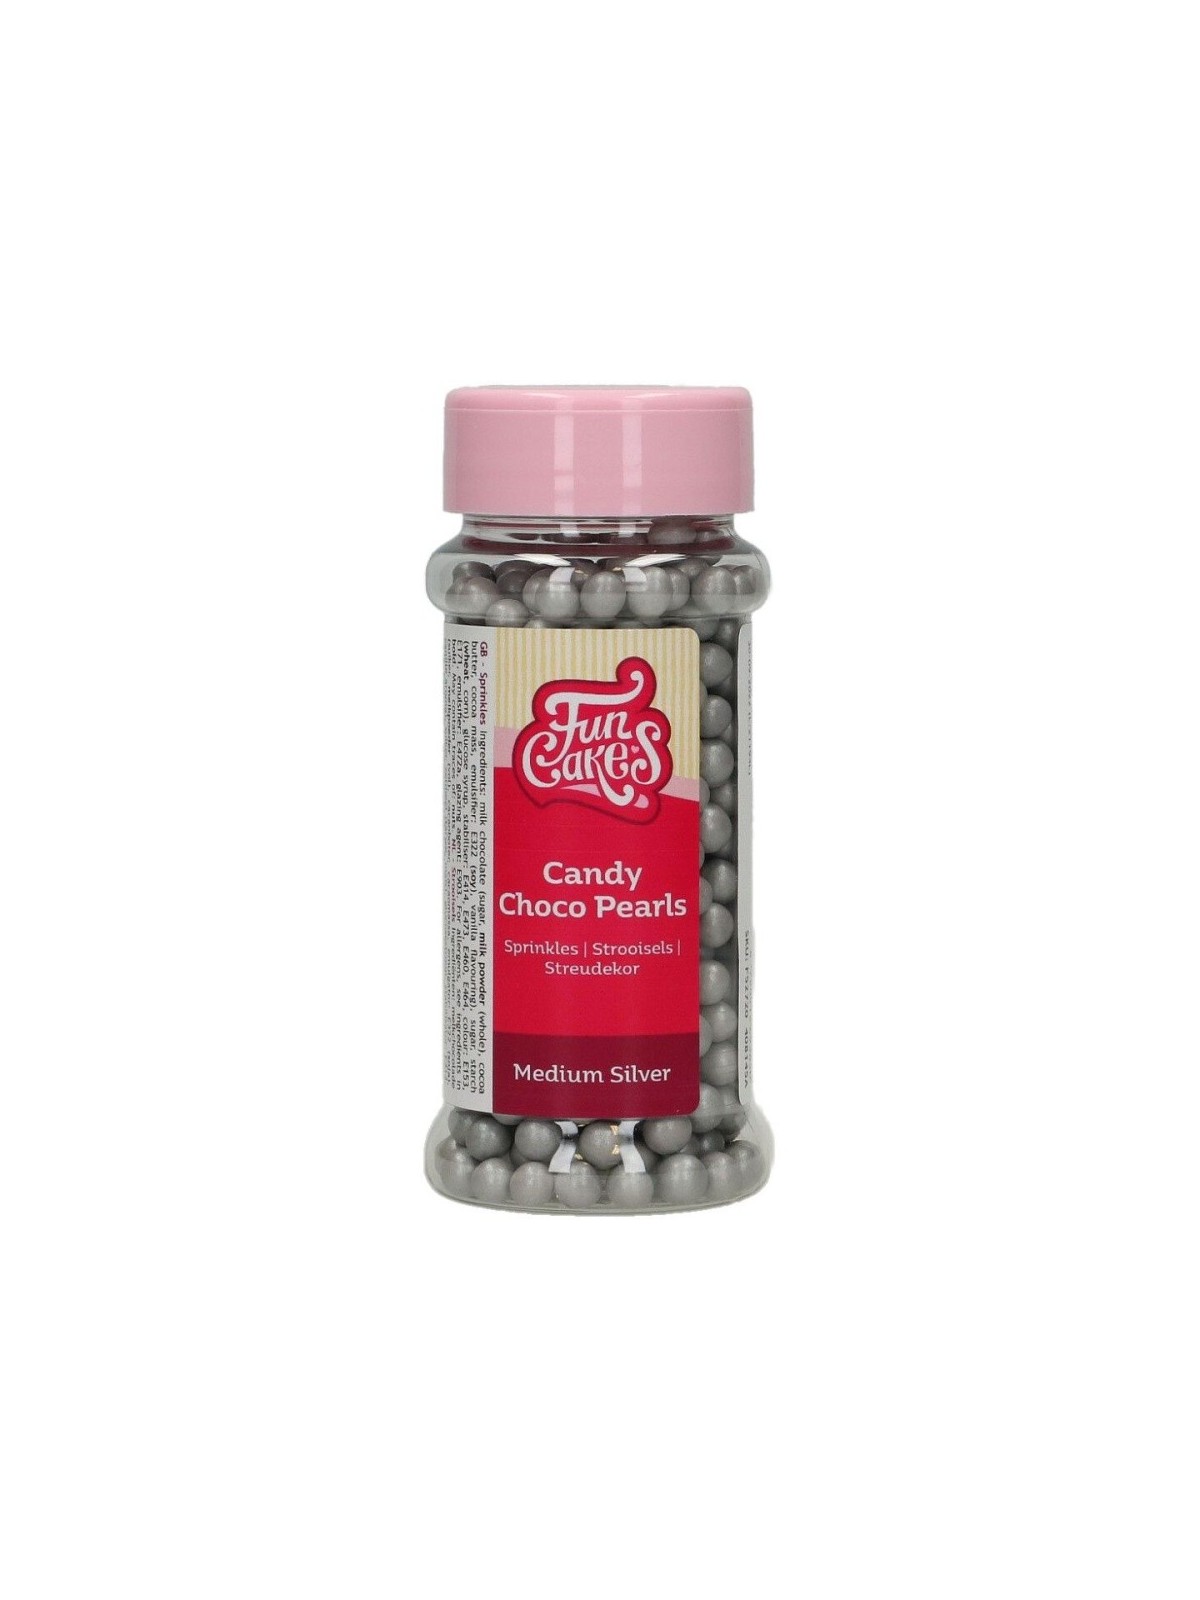 FunCakes Candy Choco pearls medium - silver - 80g